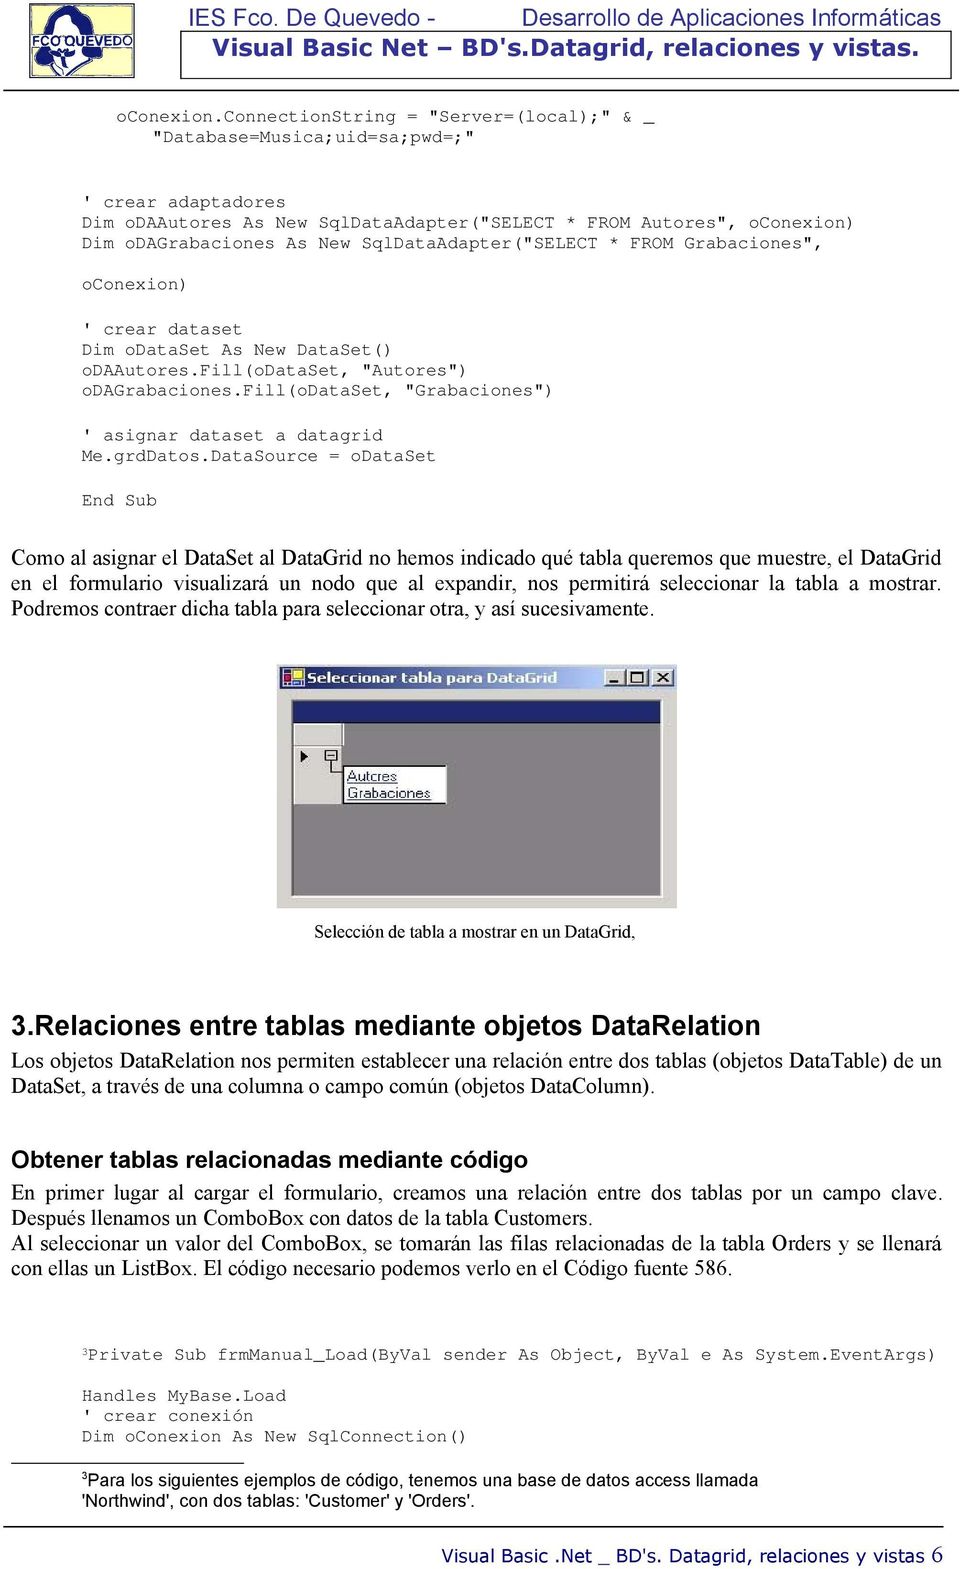 SqlDataAdapter("SELECT * FROM Grabaciones", oconexion) ' crear dataset Dim odataset As New DataSet() odaautores.fill(odataset, "Autores") odagrabaciones.